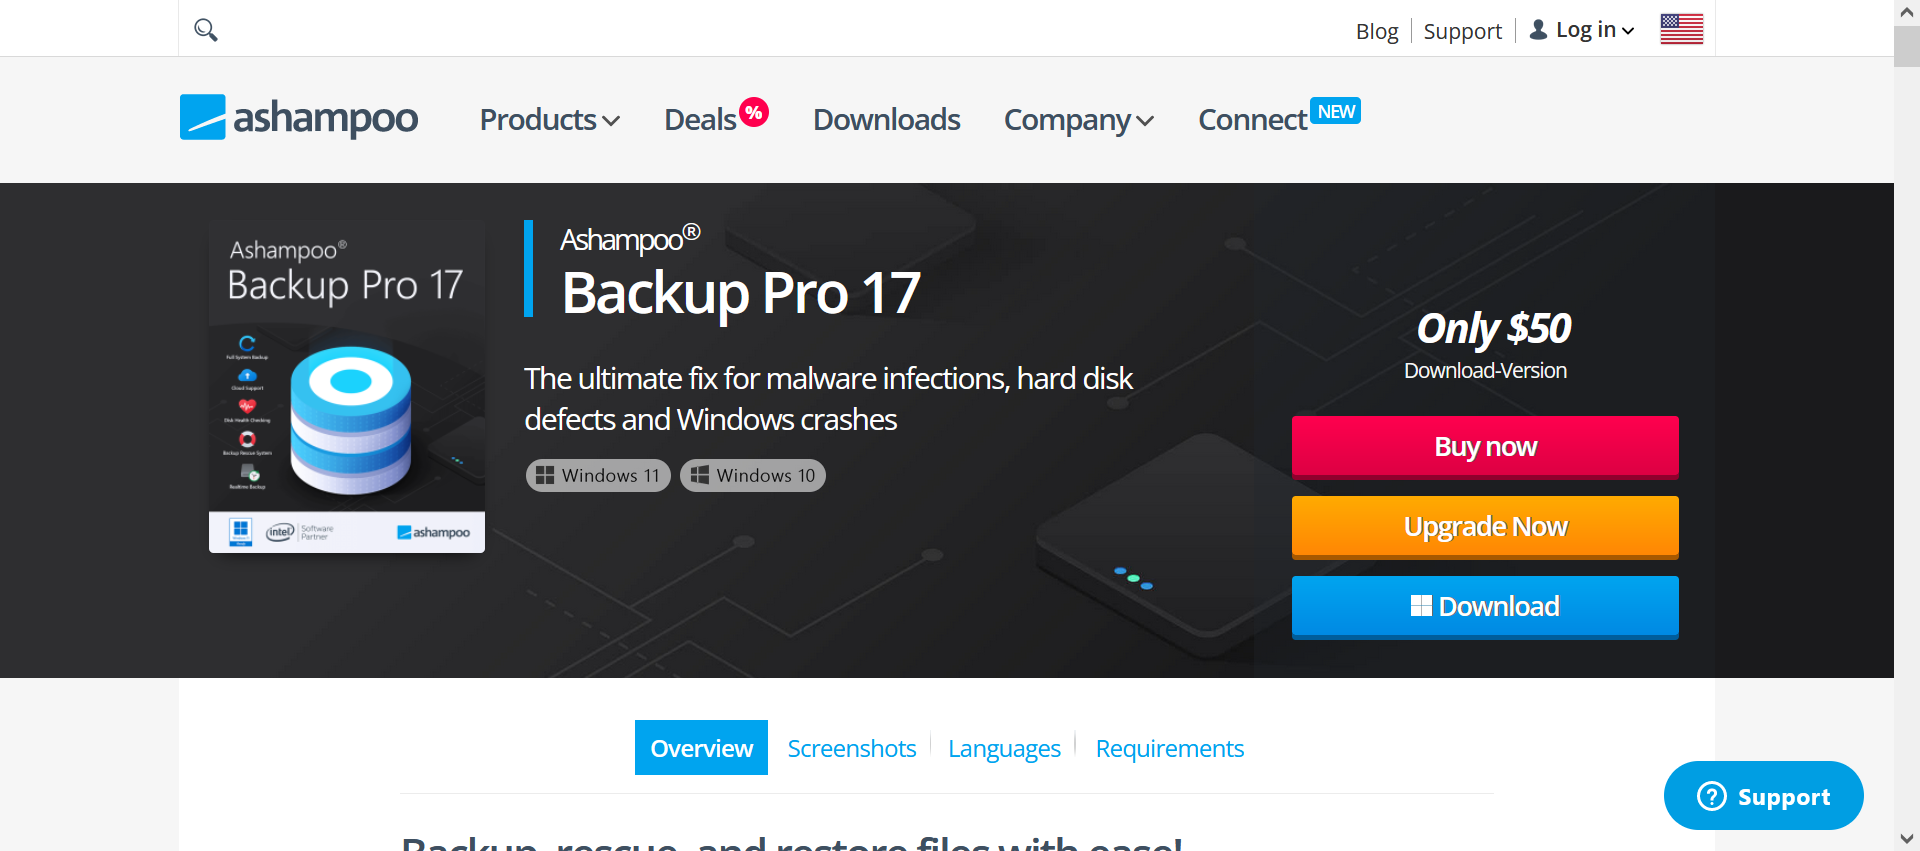 Ashampoo Backup Pro 17 compatible cloud provider